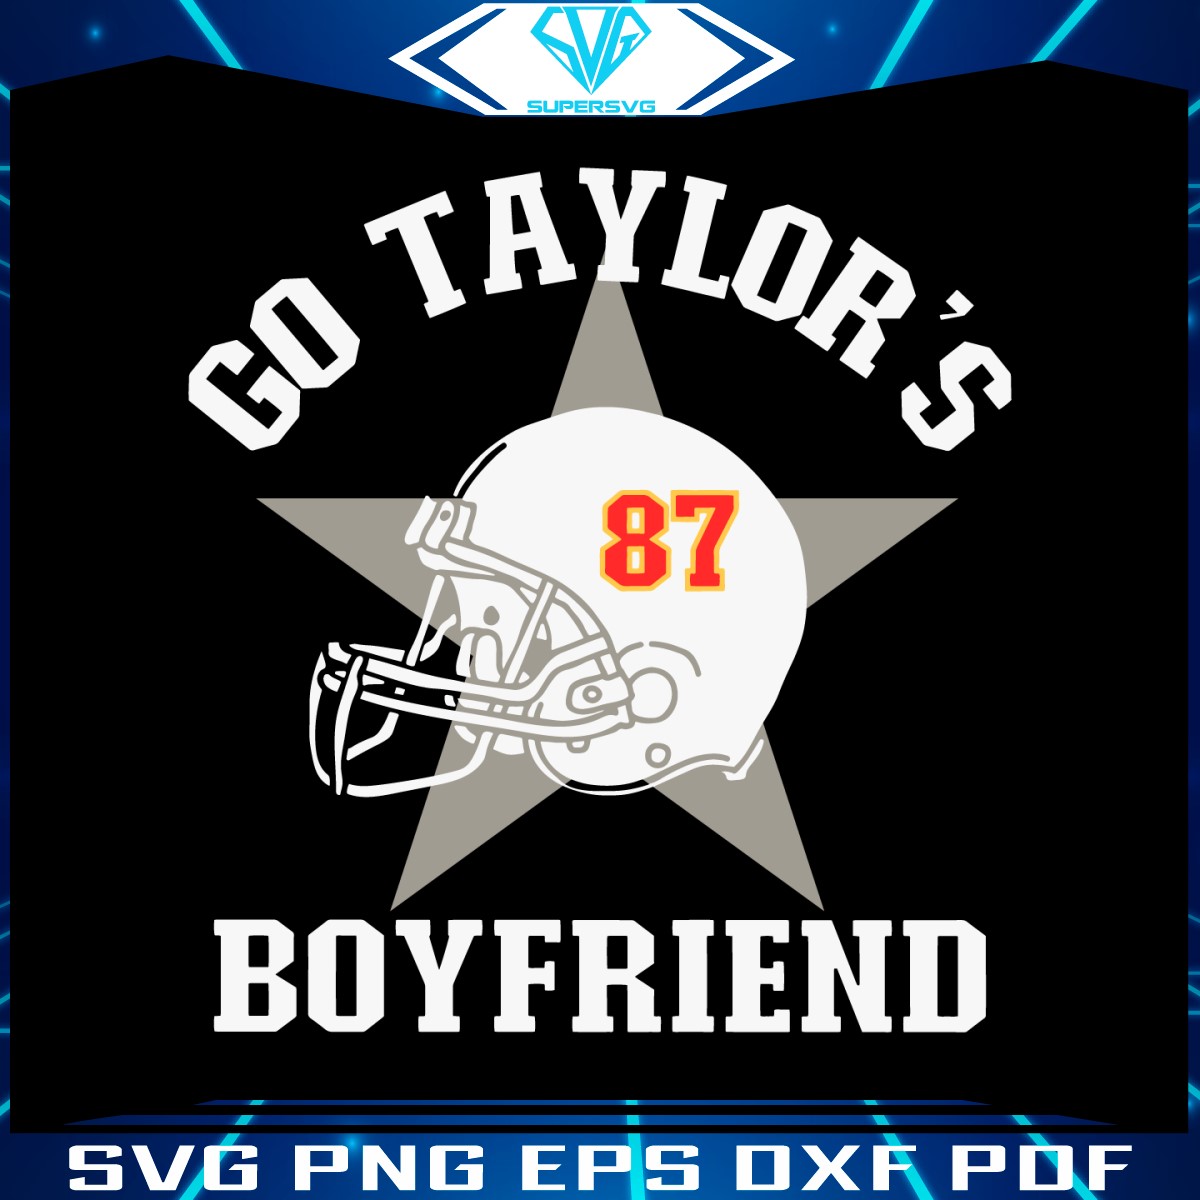 go-taylors-boyfriends-helmet-star-svg